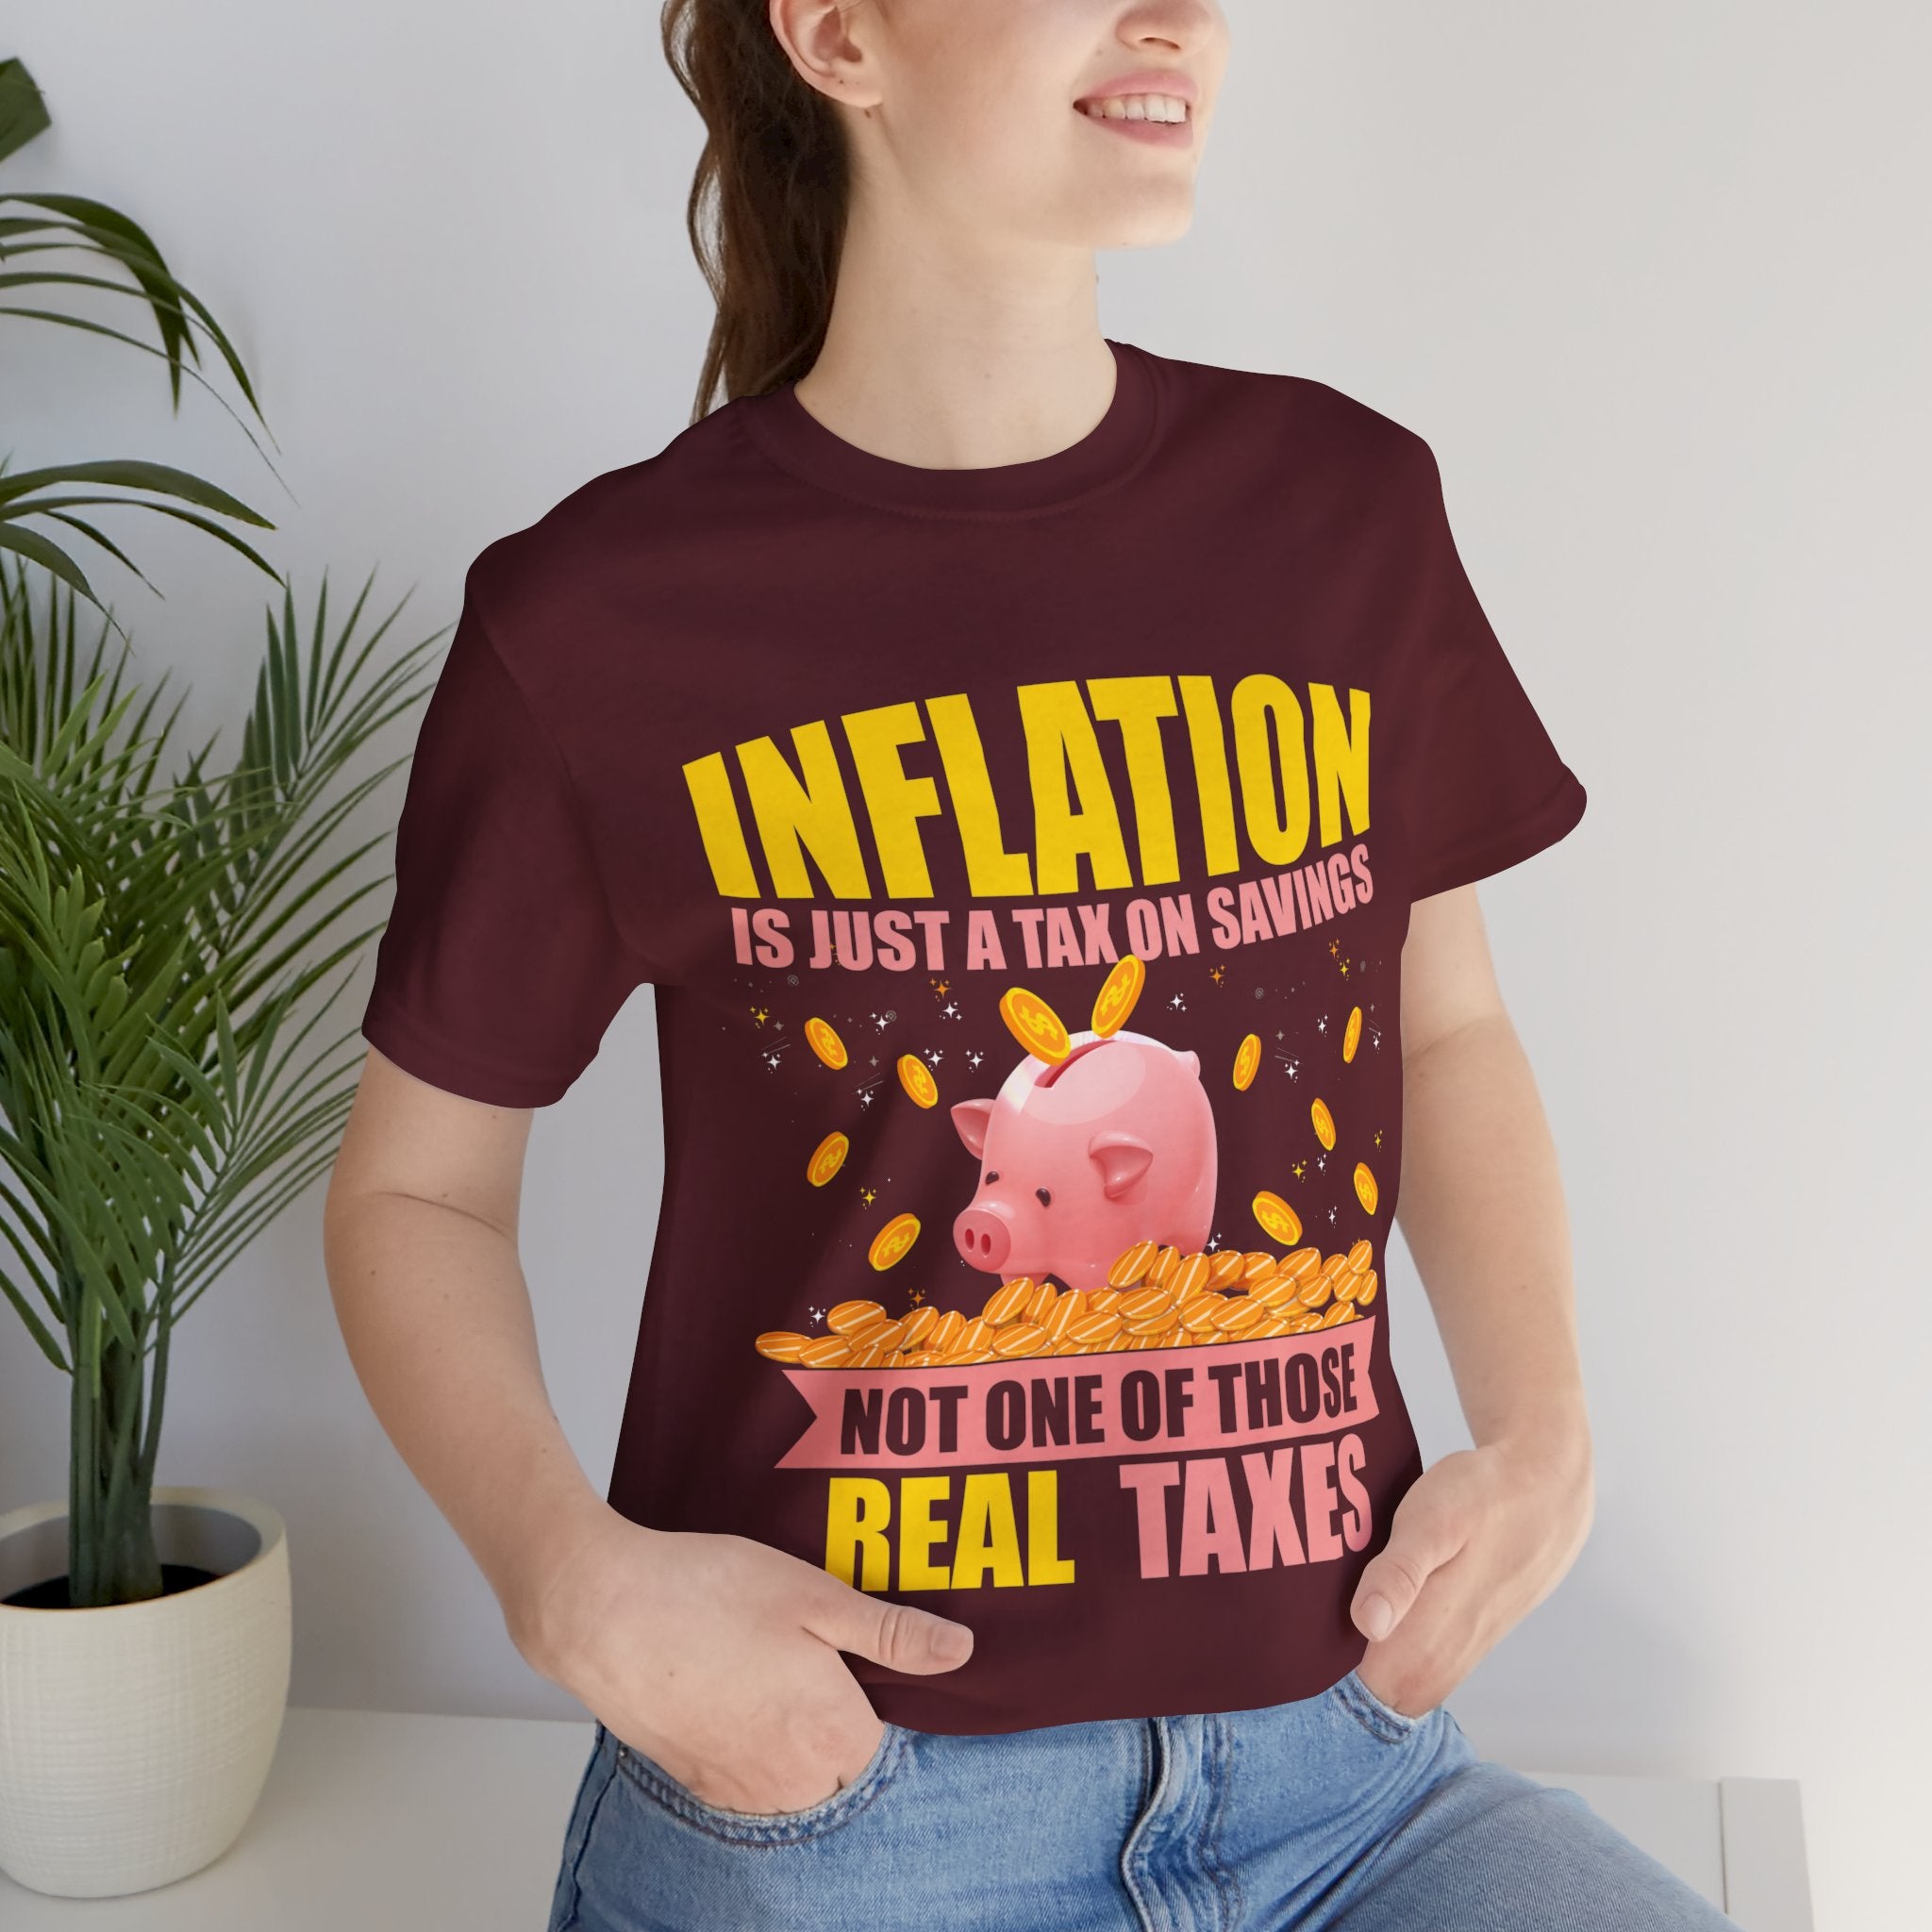 Inflation: Not a Real Tax - Piggy Bank